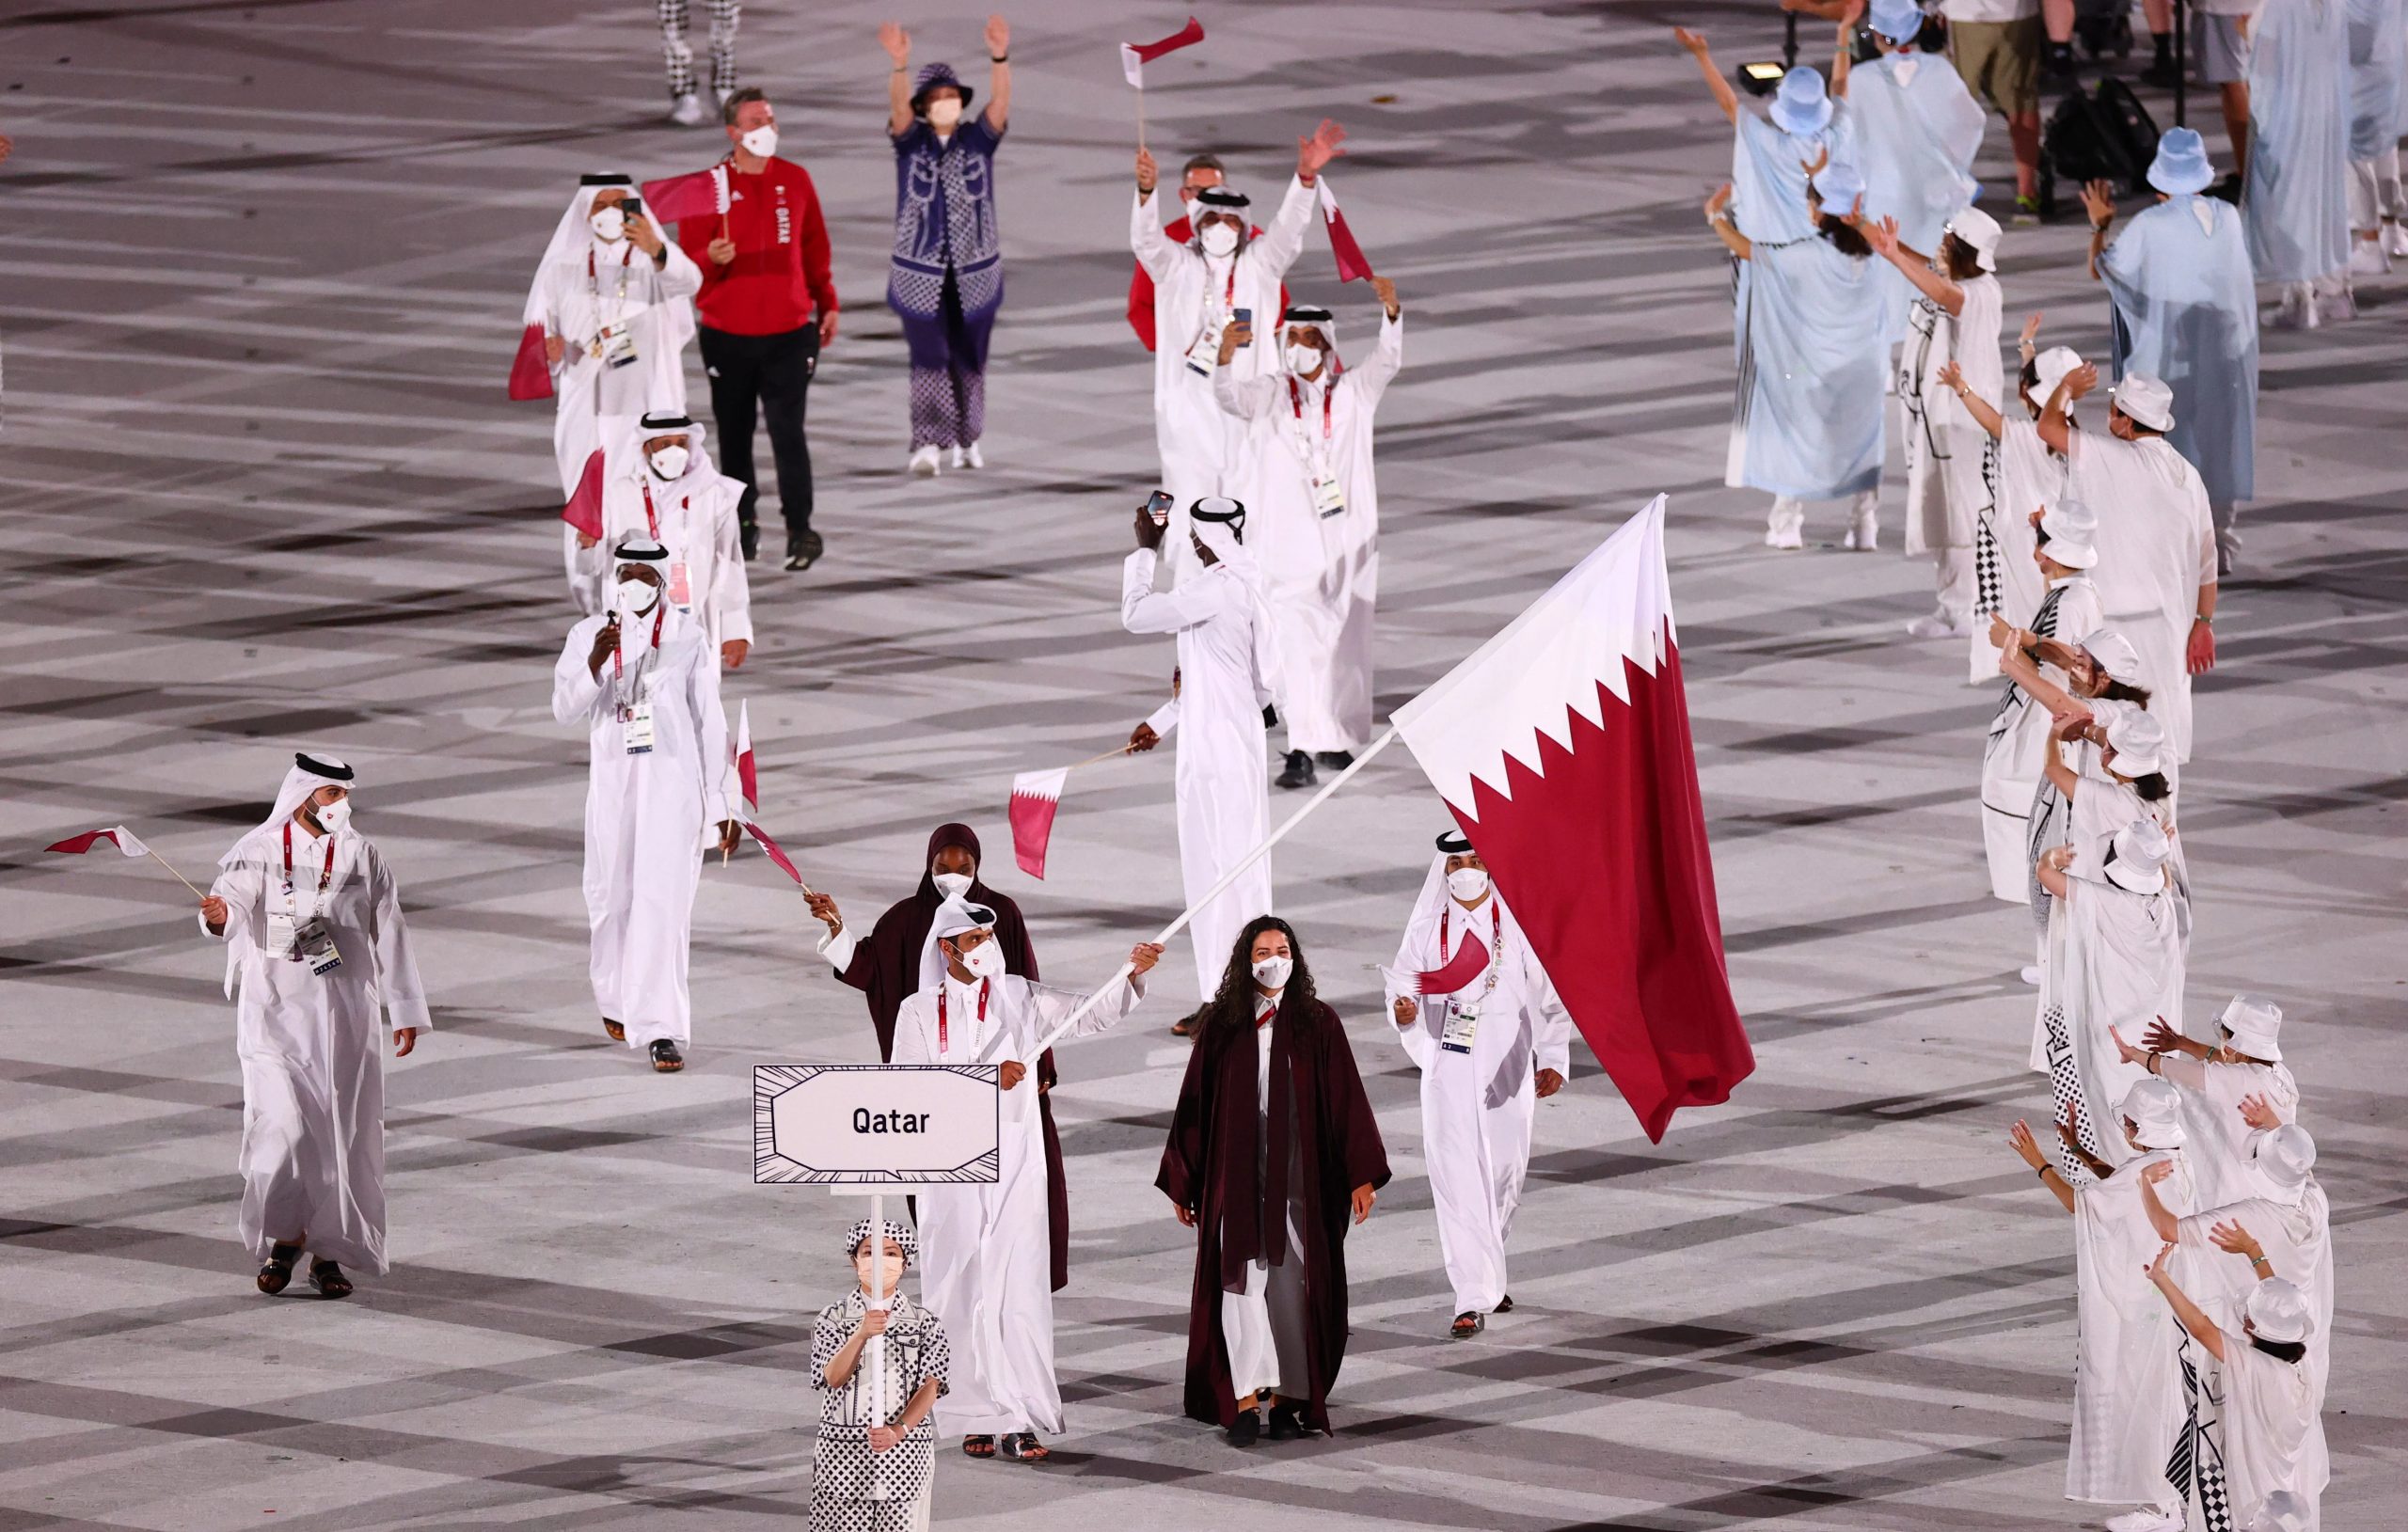 Abujbara, Al Rumaihi Raise Qatar's Flag during Opening Ceremony of Tokyo Olympics